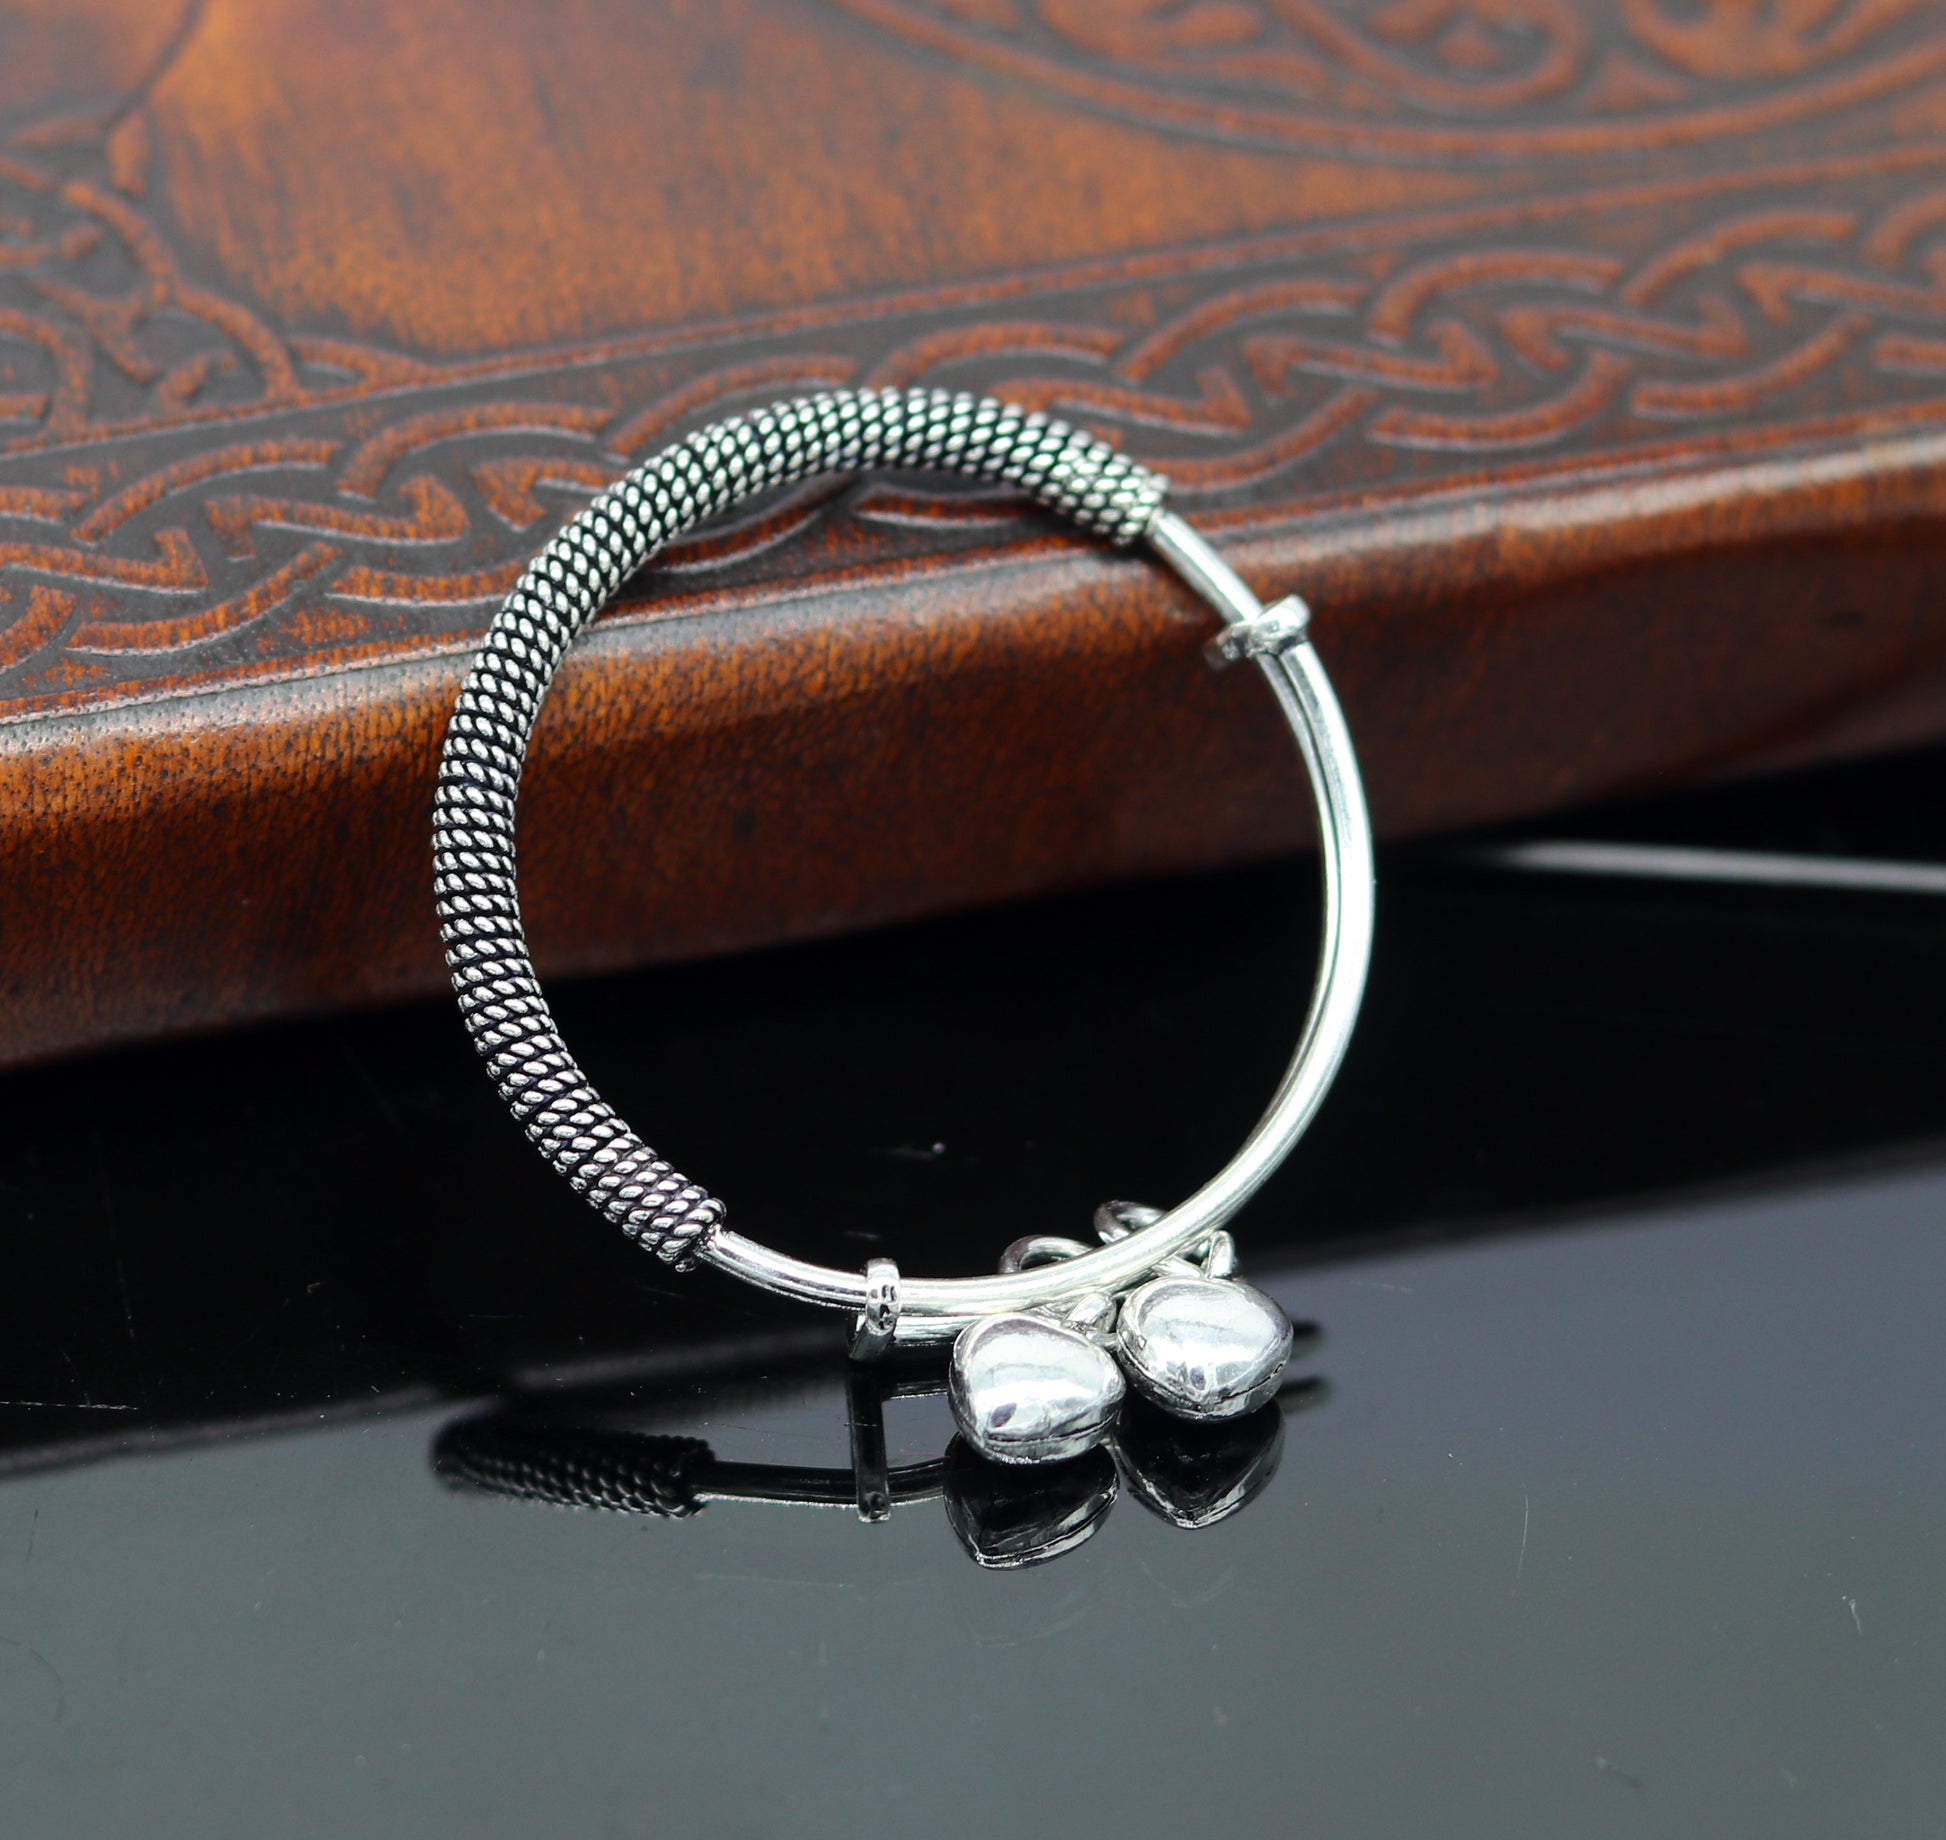 Stylish charm oxidized 925 sterling silver adjustable baby solid bangle bracelet, charm bangle, tribal unisex kids jewelry bbk84 - TRIBAL ORNAMENTS